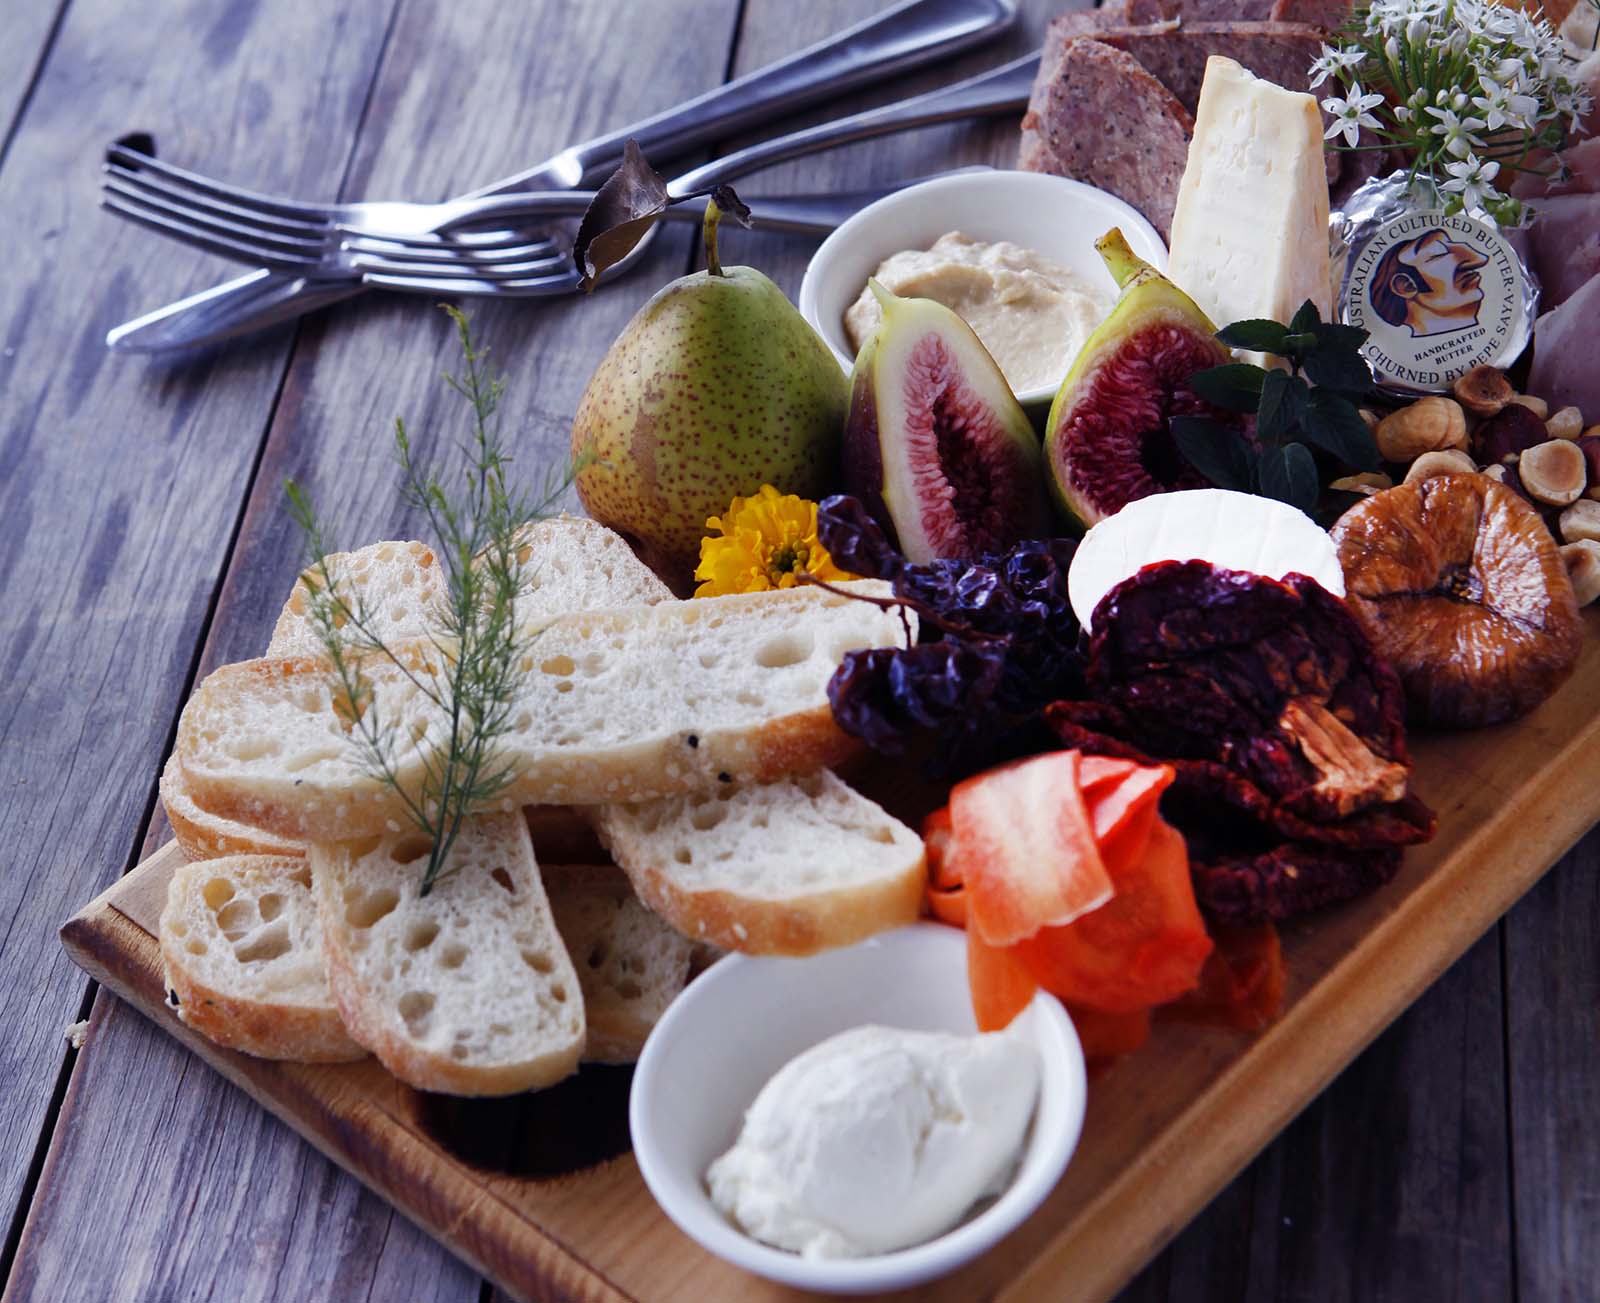 Ploughman’s lunch platter at The Agrestic Grocer, Orange, NSW | A taste of Orange